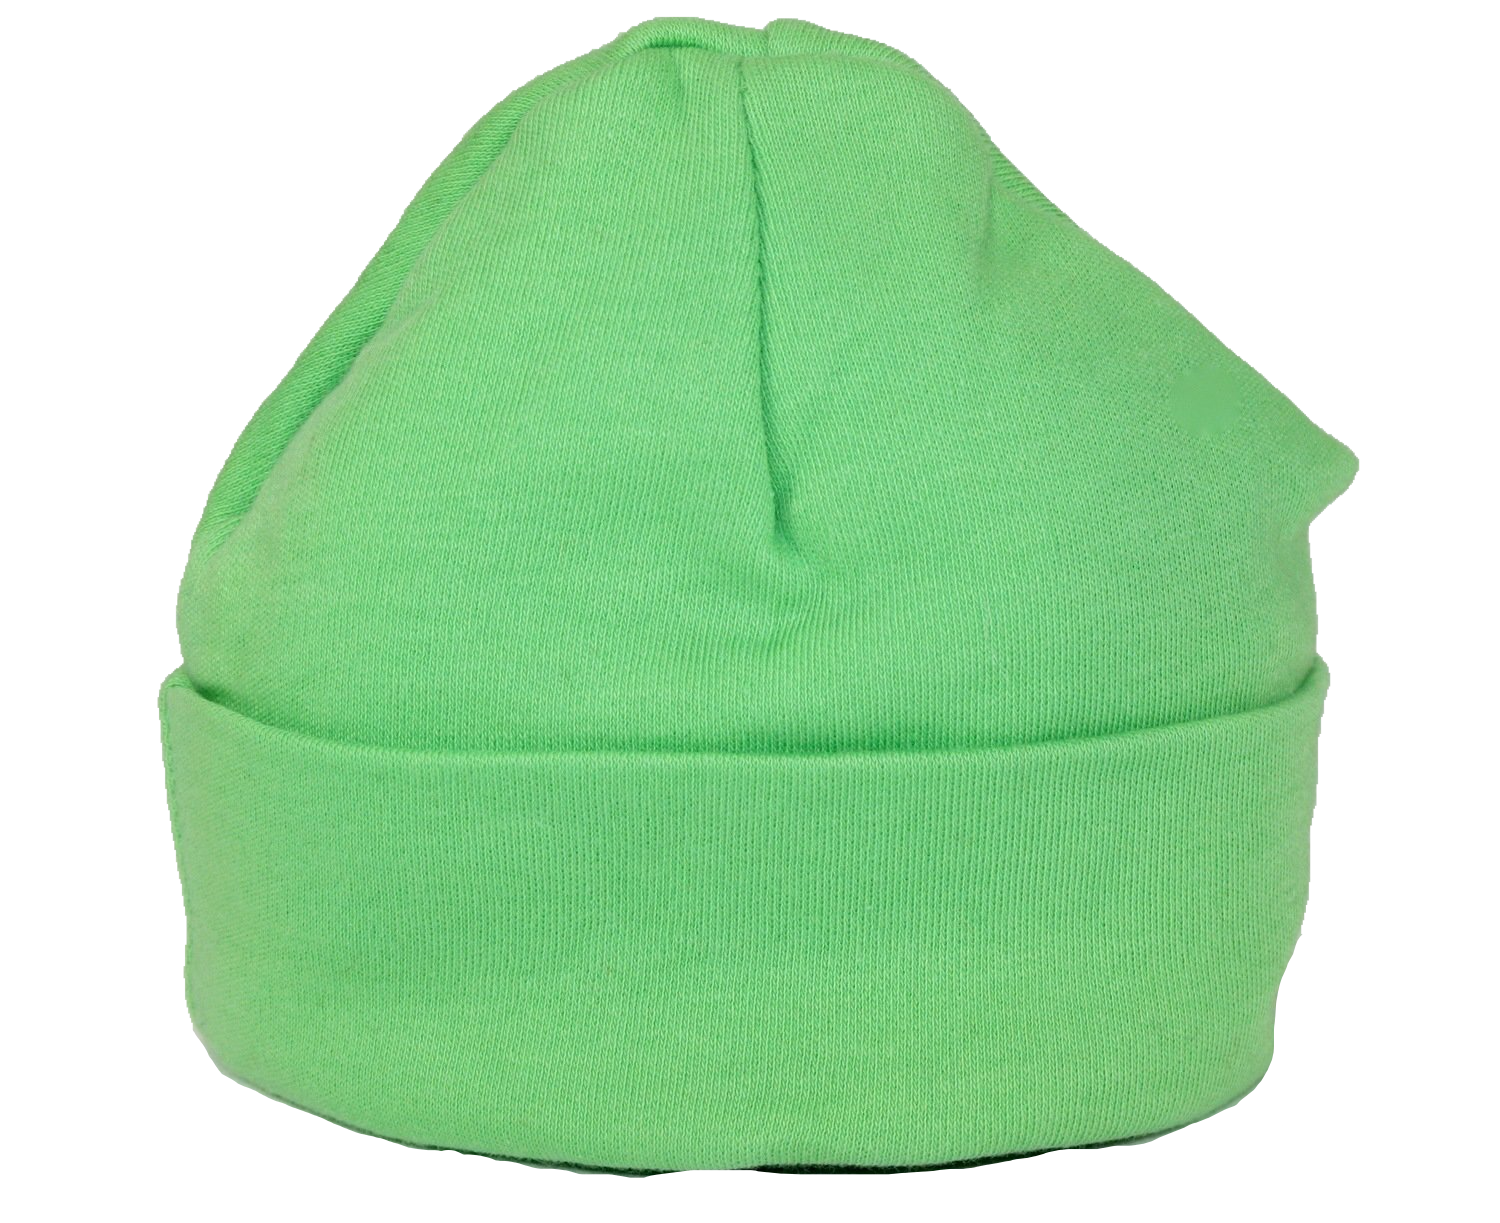 Green baby hat